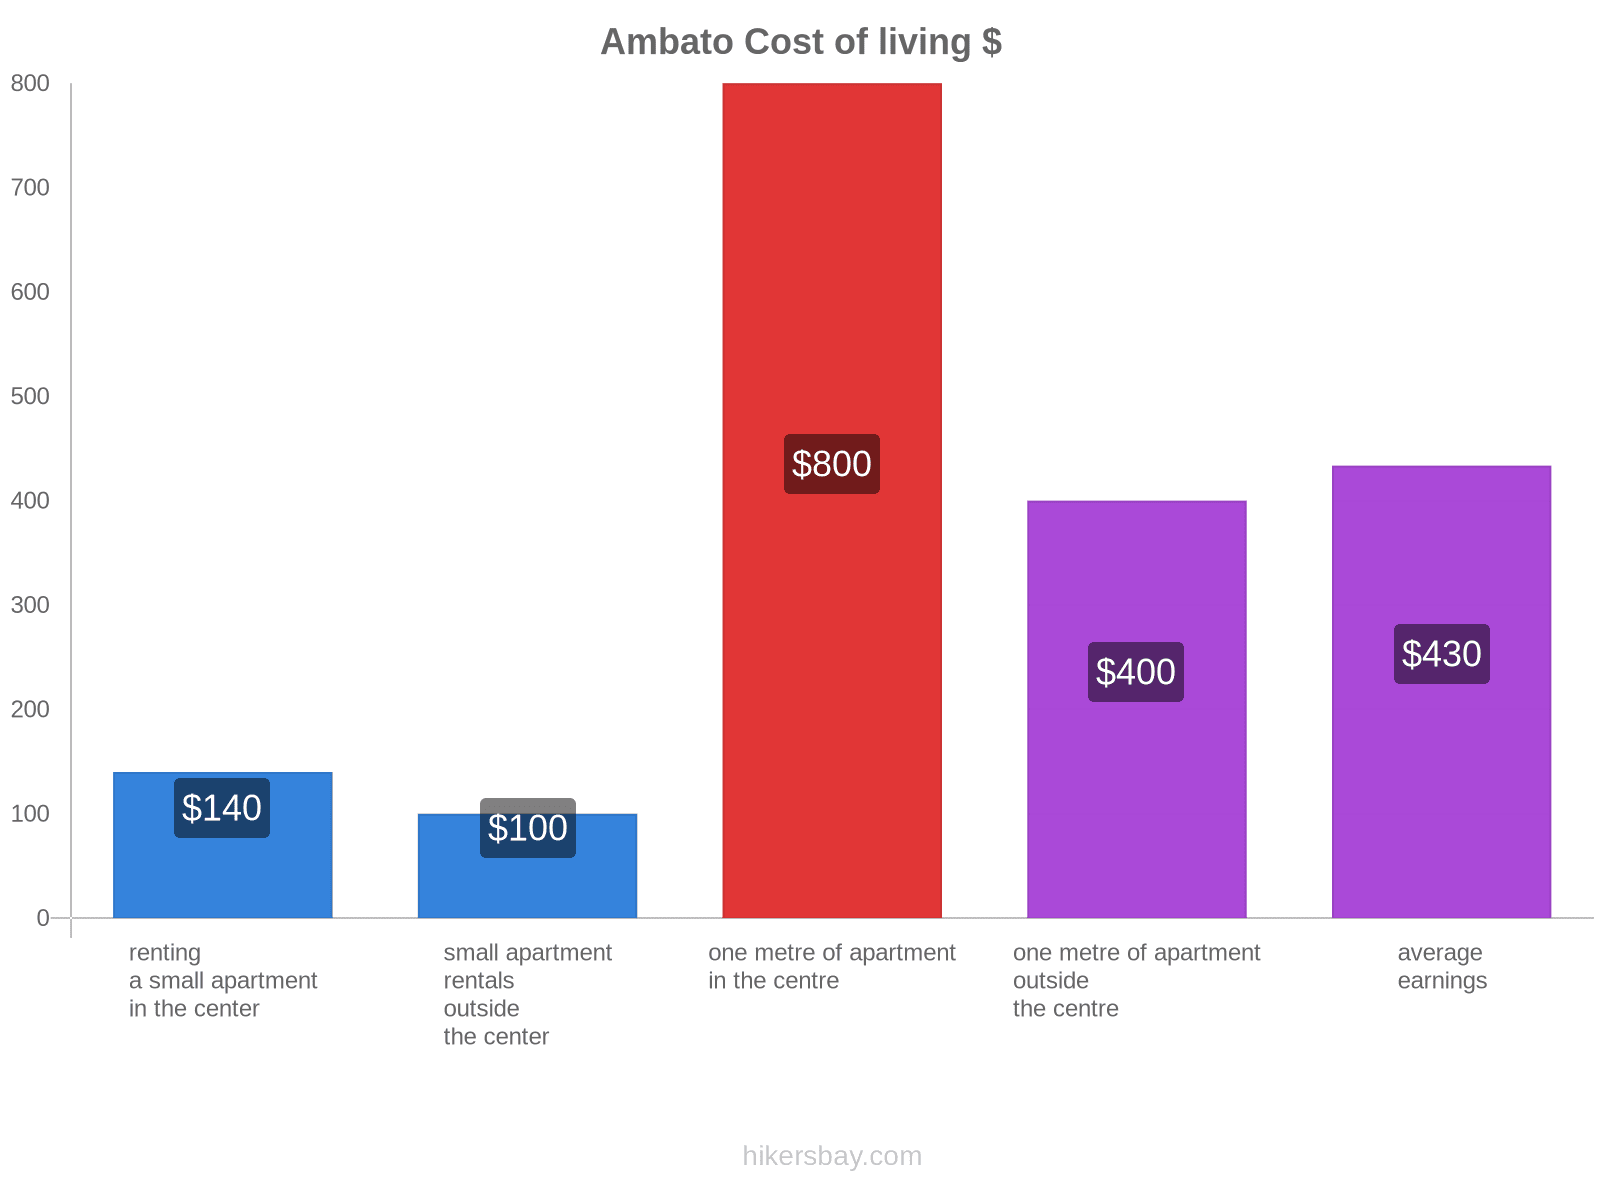 Ambato cost of living hikersbay.com